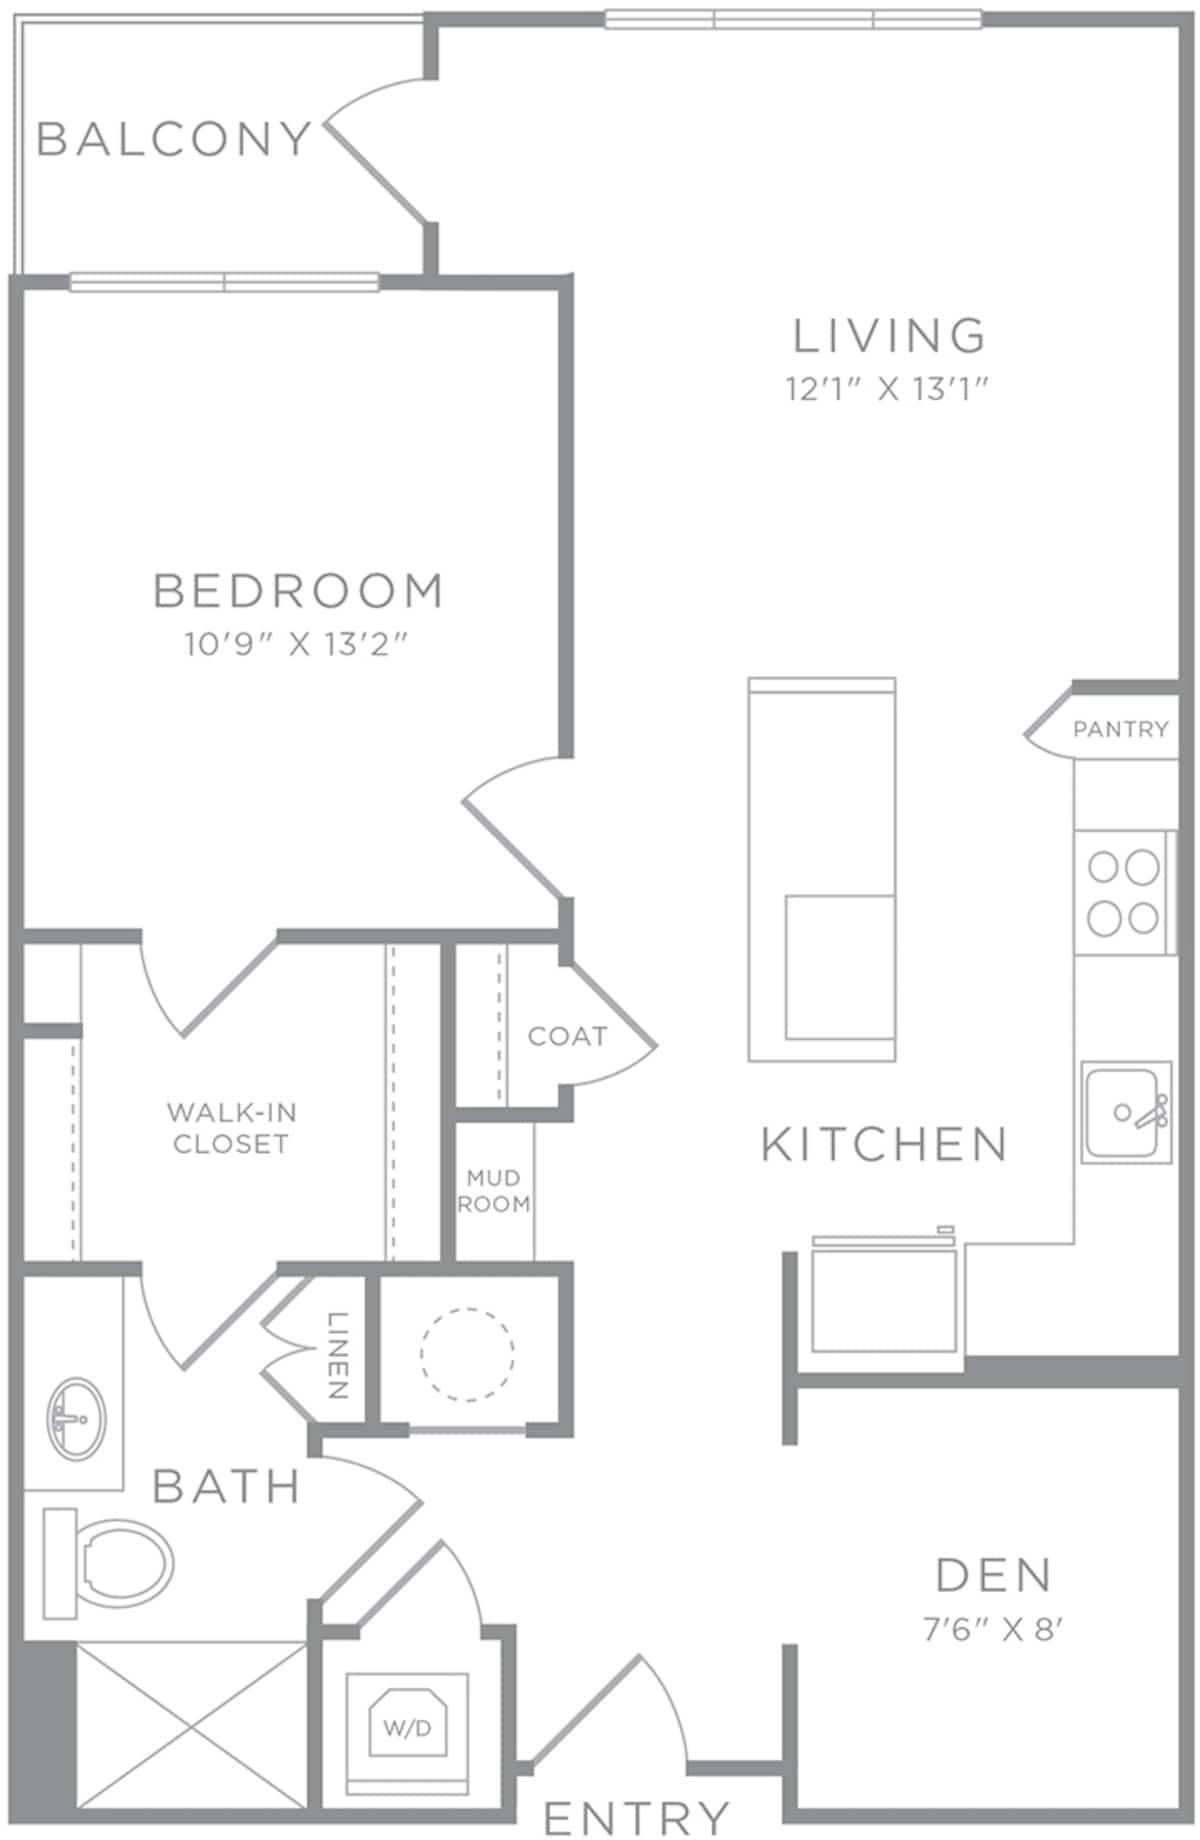 Floorplan diagram for A9, showing 1 bedroom